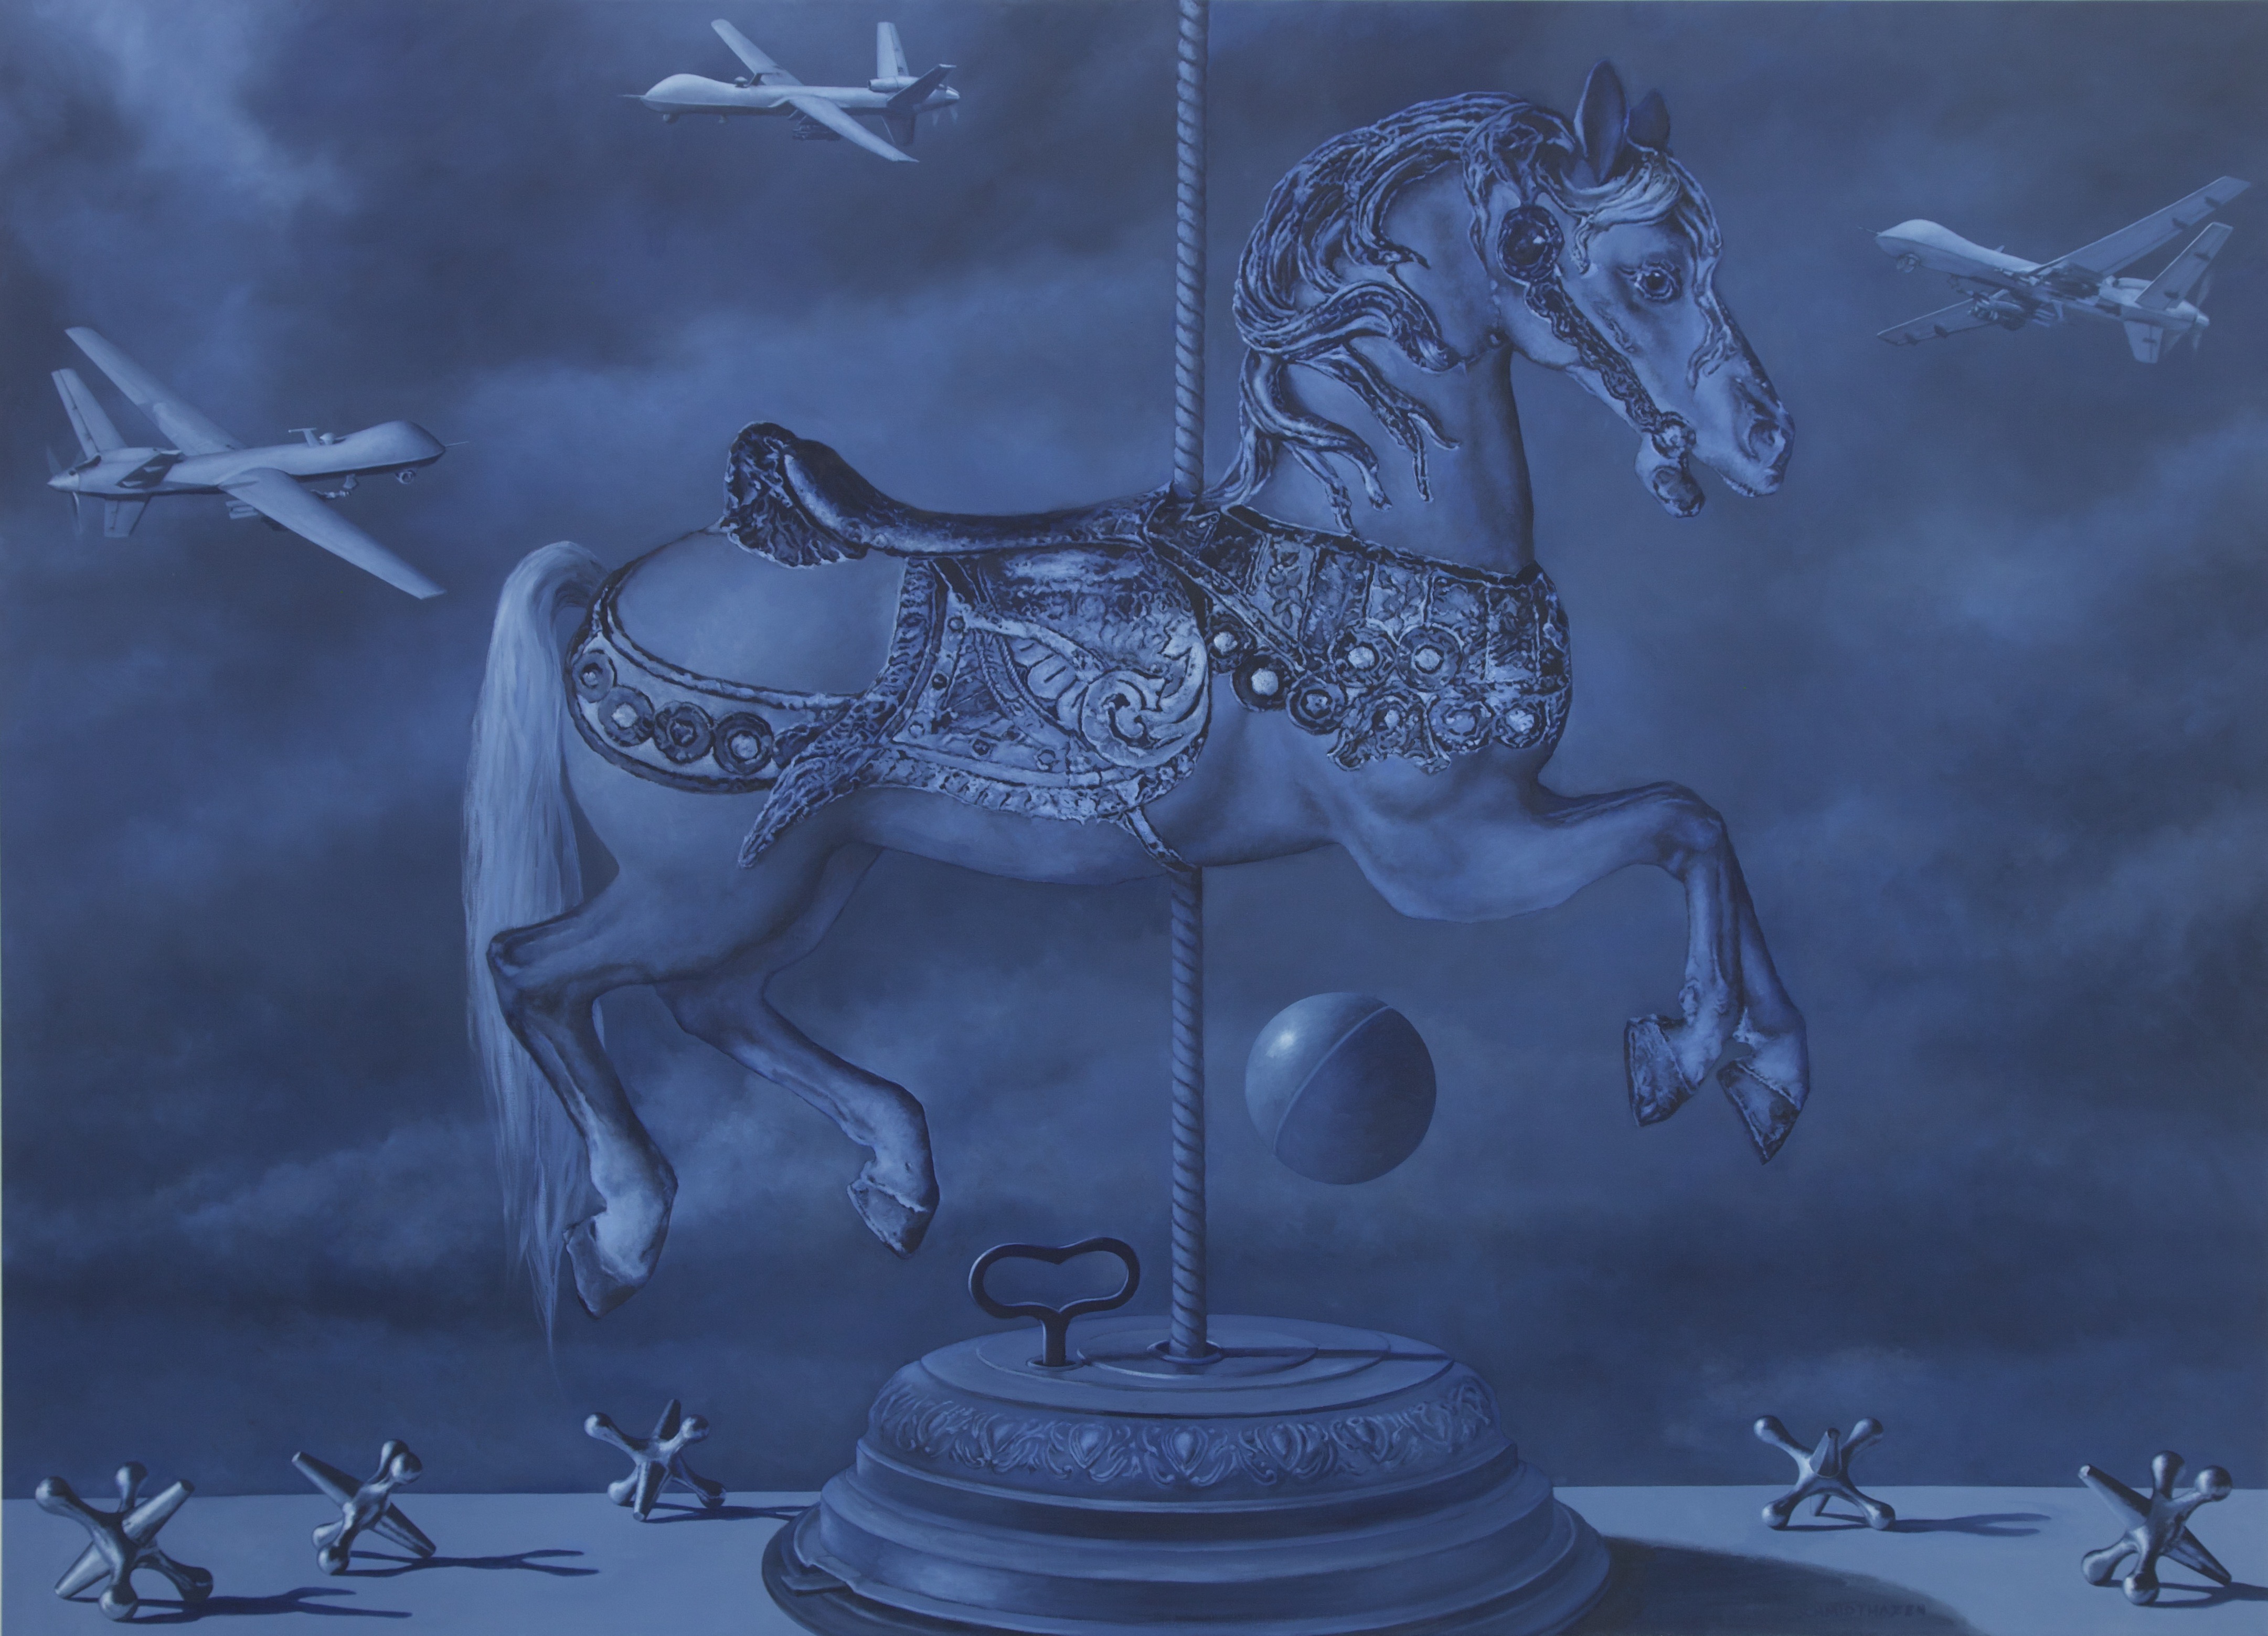 Carrousel horse, 3 army drones flying, jacks , ball , monochromatic blue